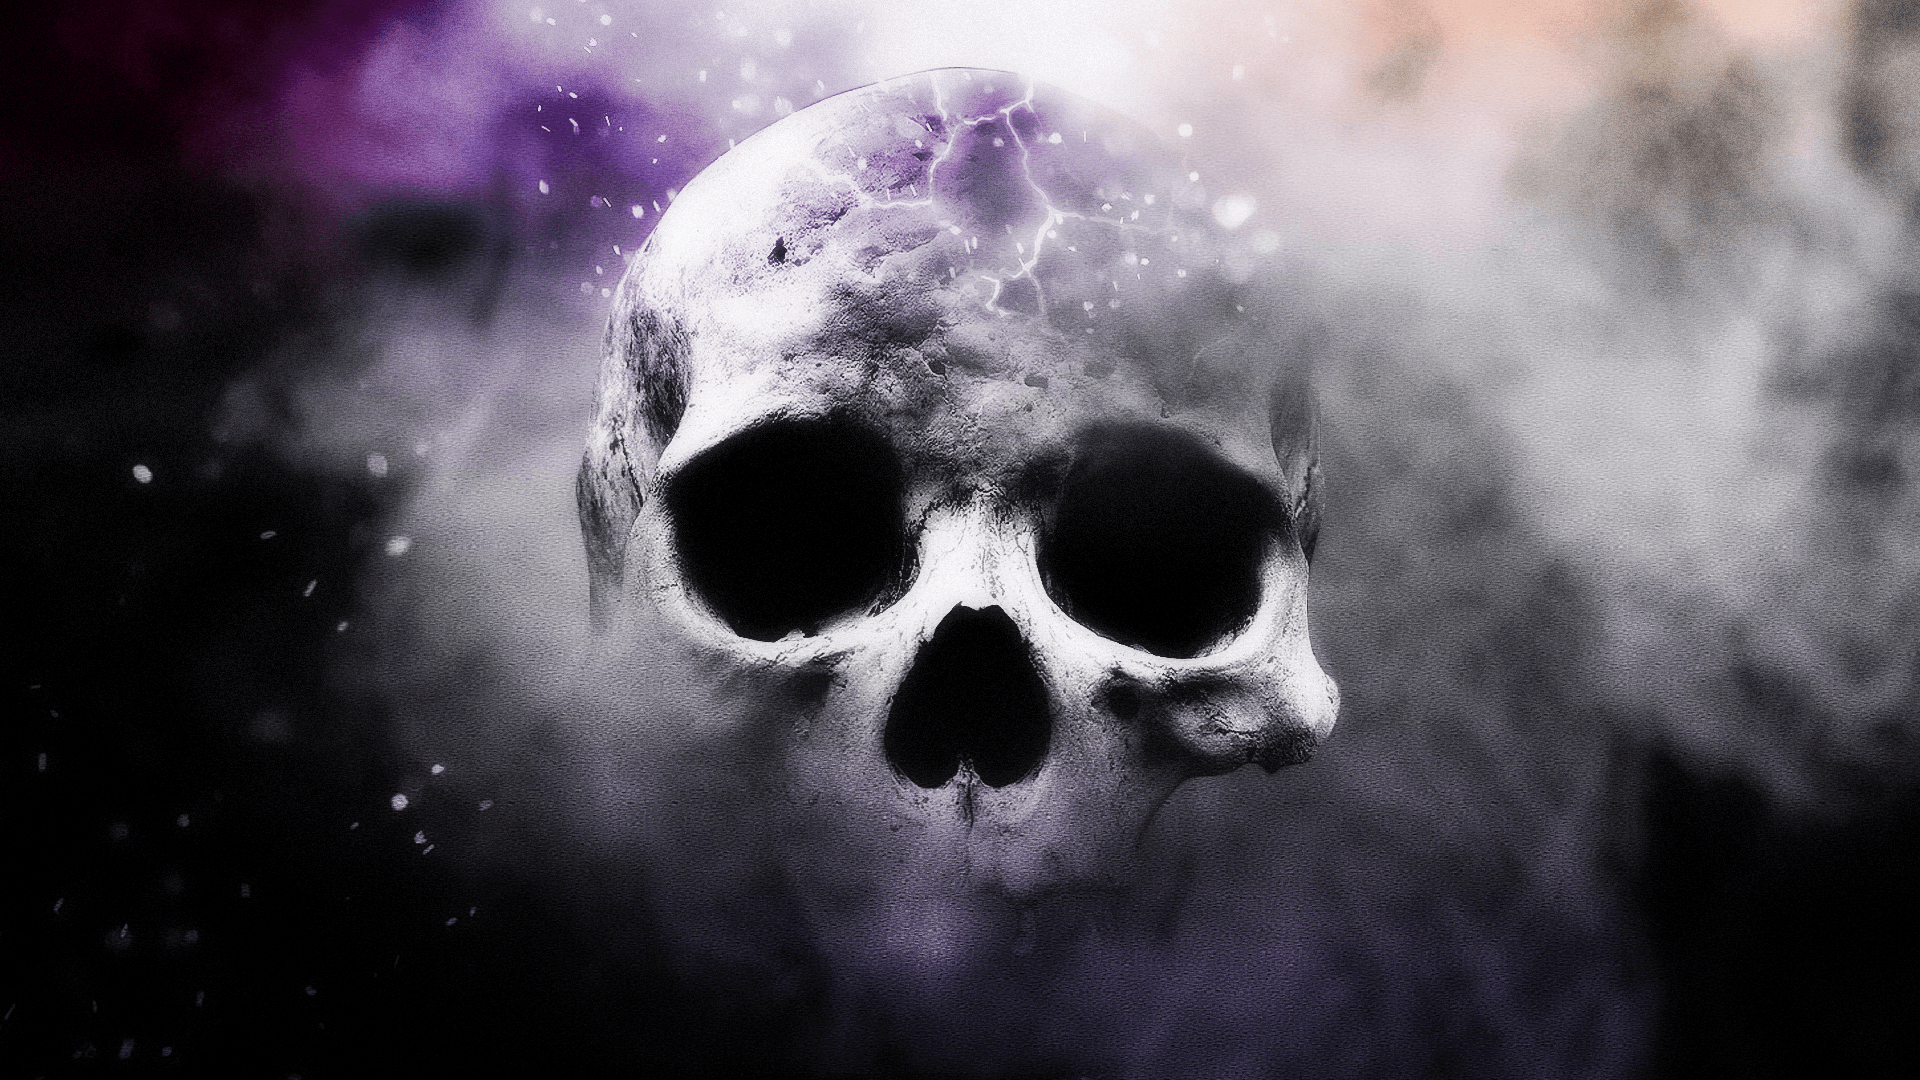 HD desktop wallpaper Dark Skull Horror Scary download free picture  684755